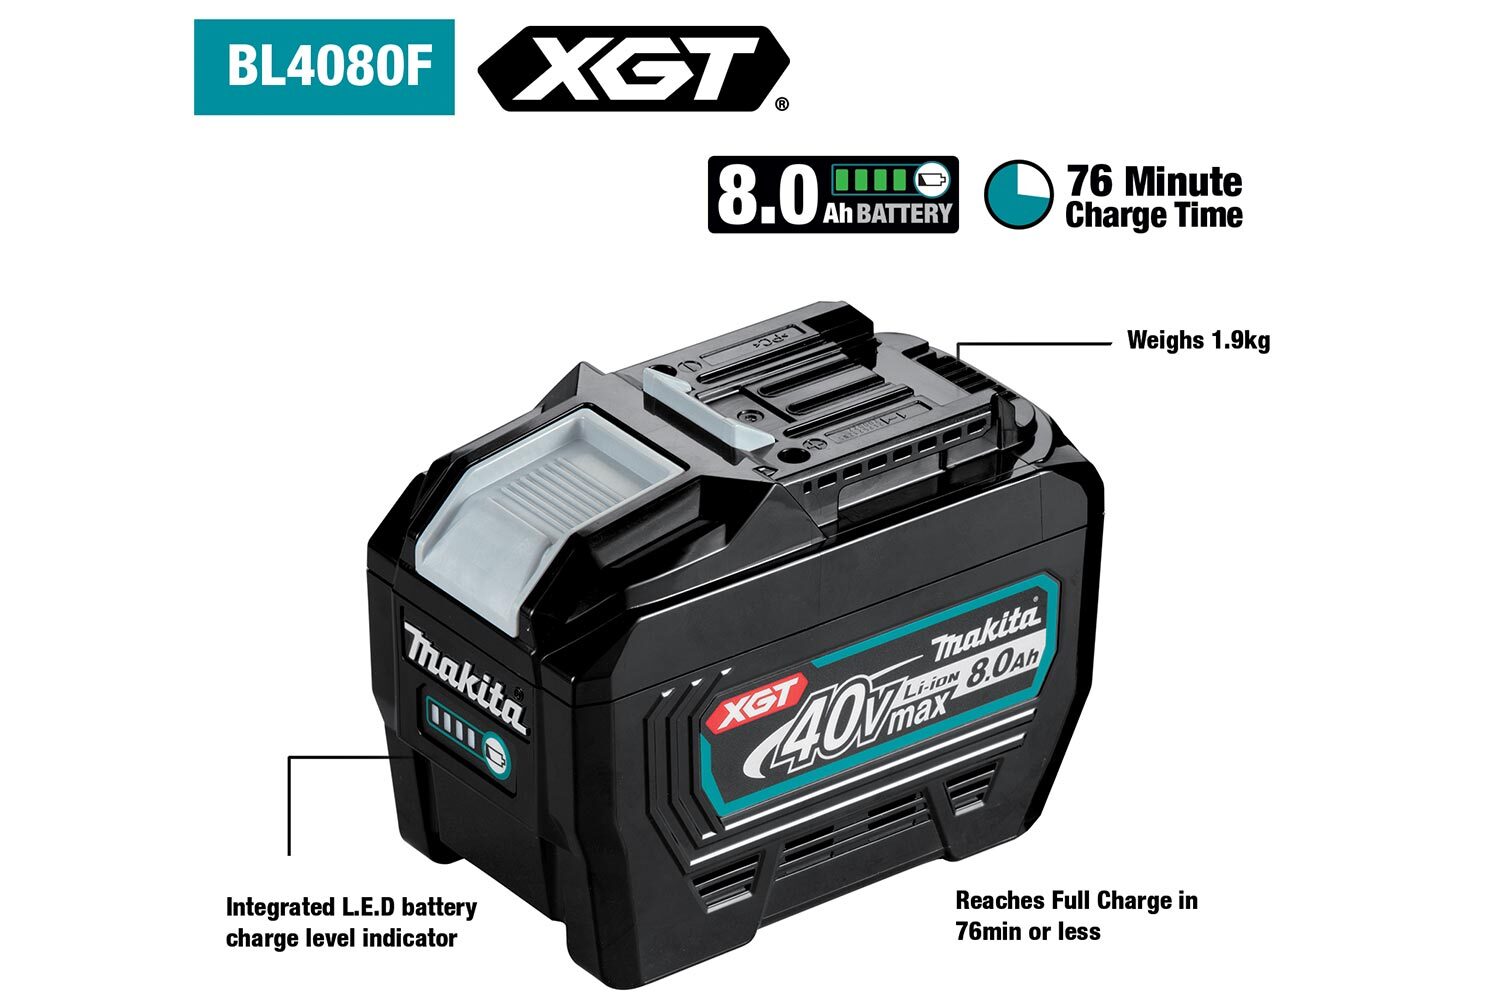 Makita 40V max XGT® 8.0Ah Battery